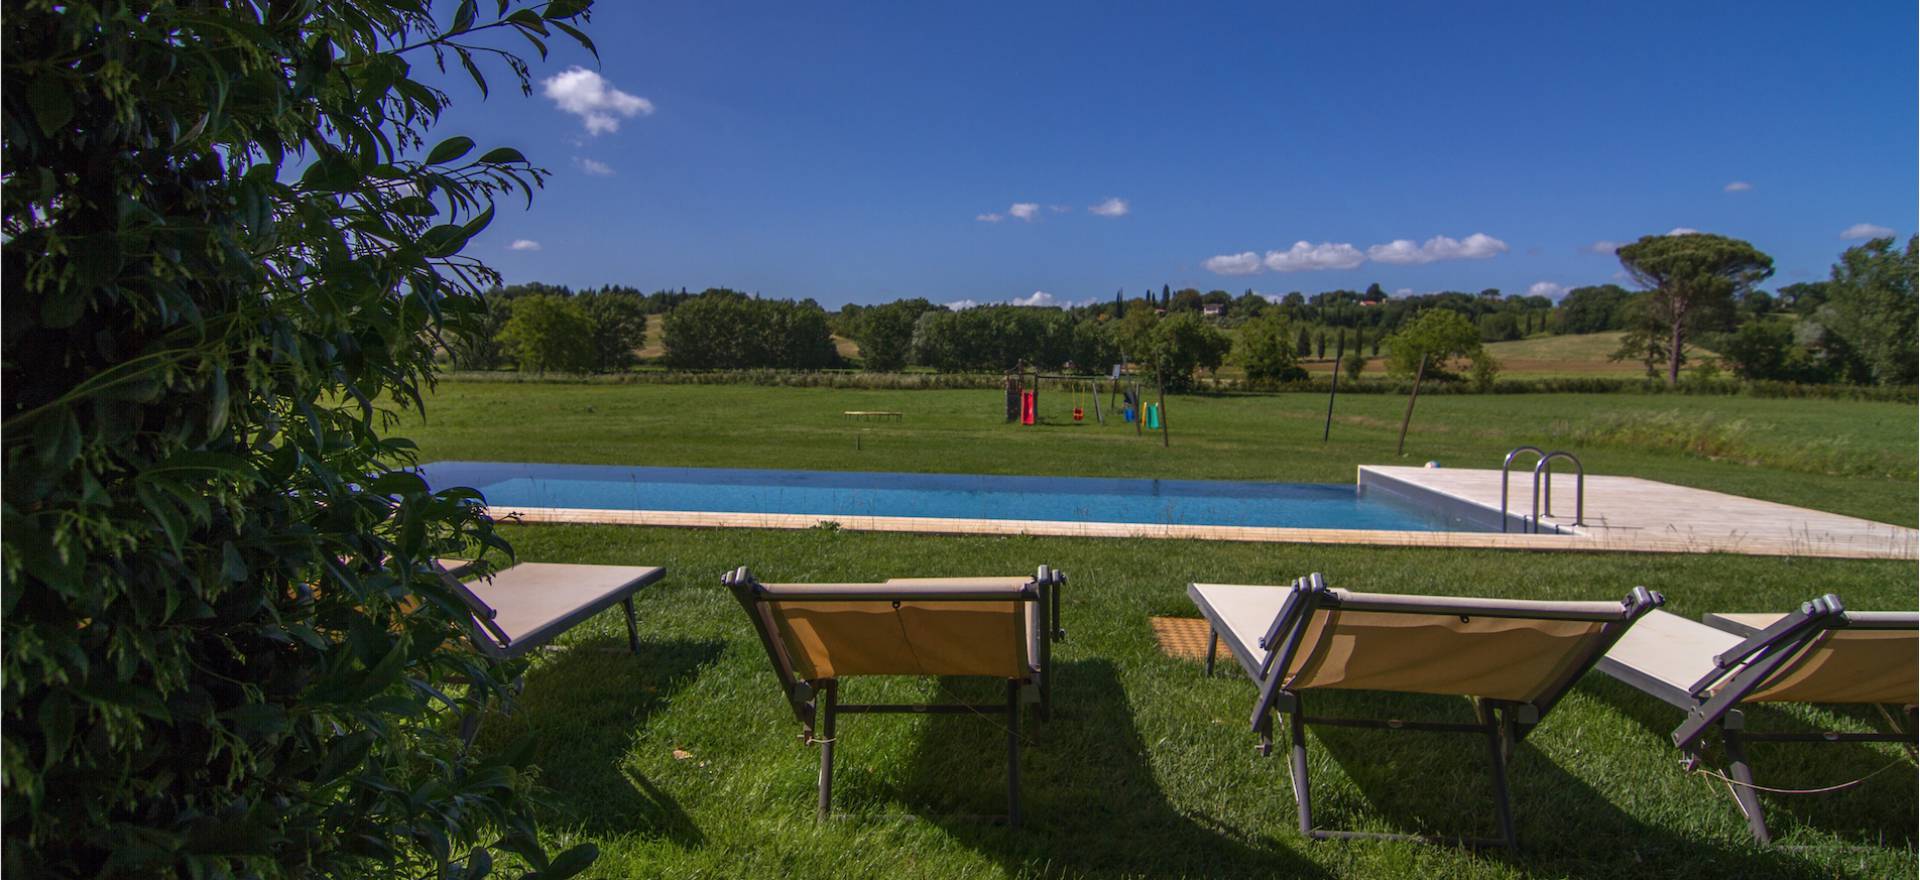 Agriturismo Toscana Agriturismo Siena, appartamenti di lusso e piscina